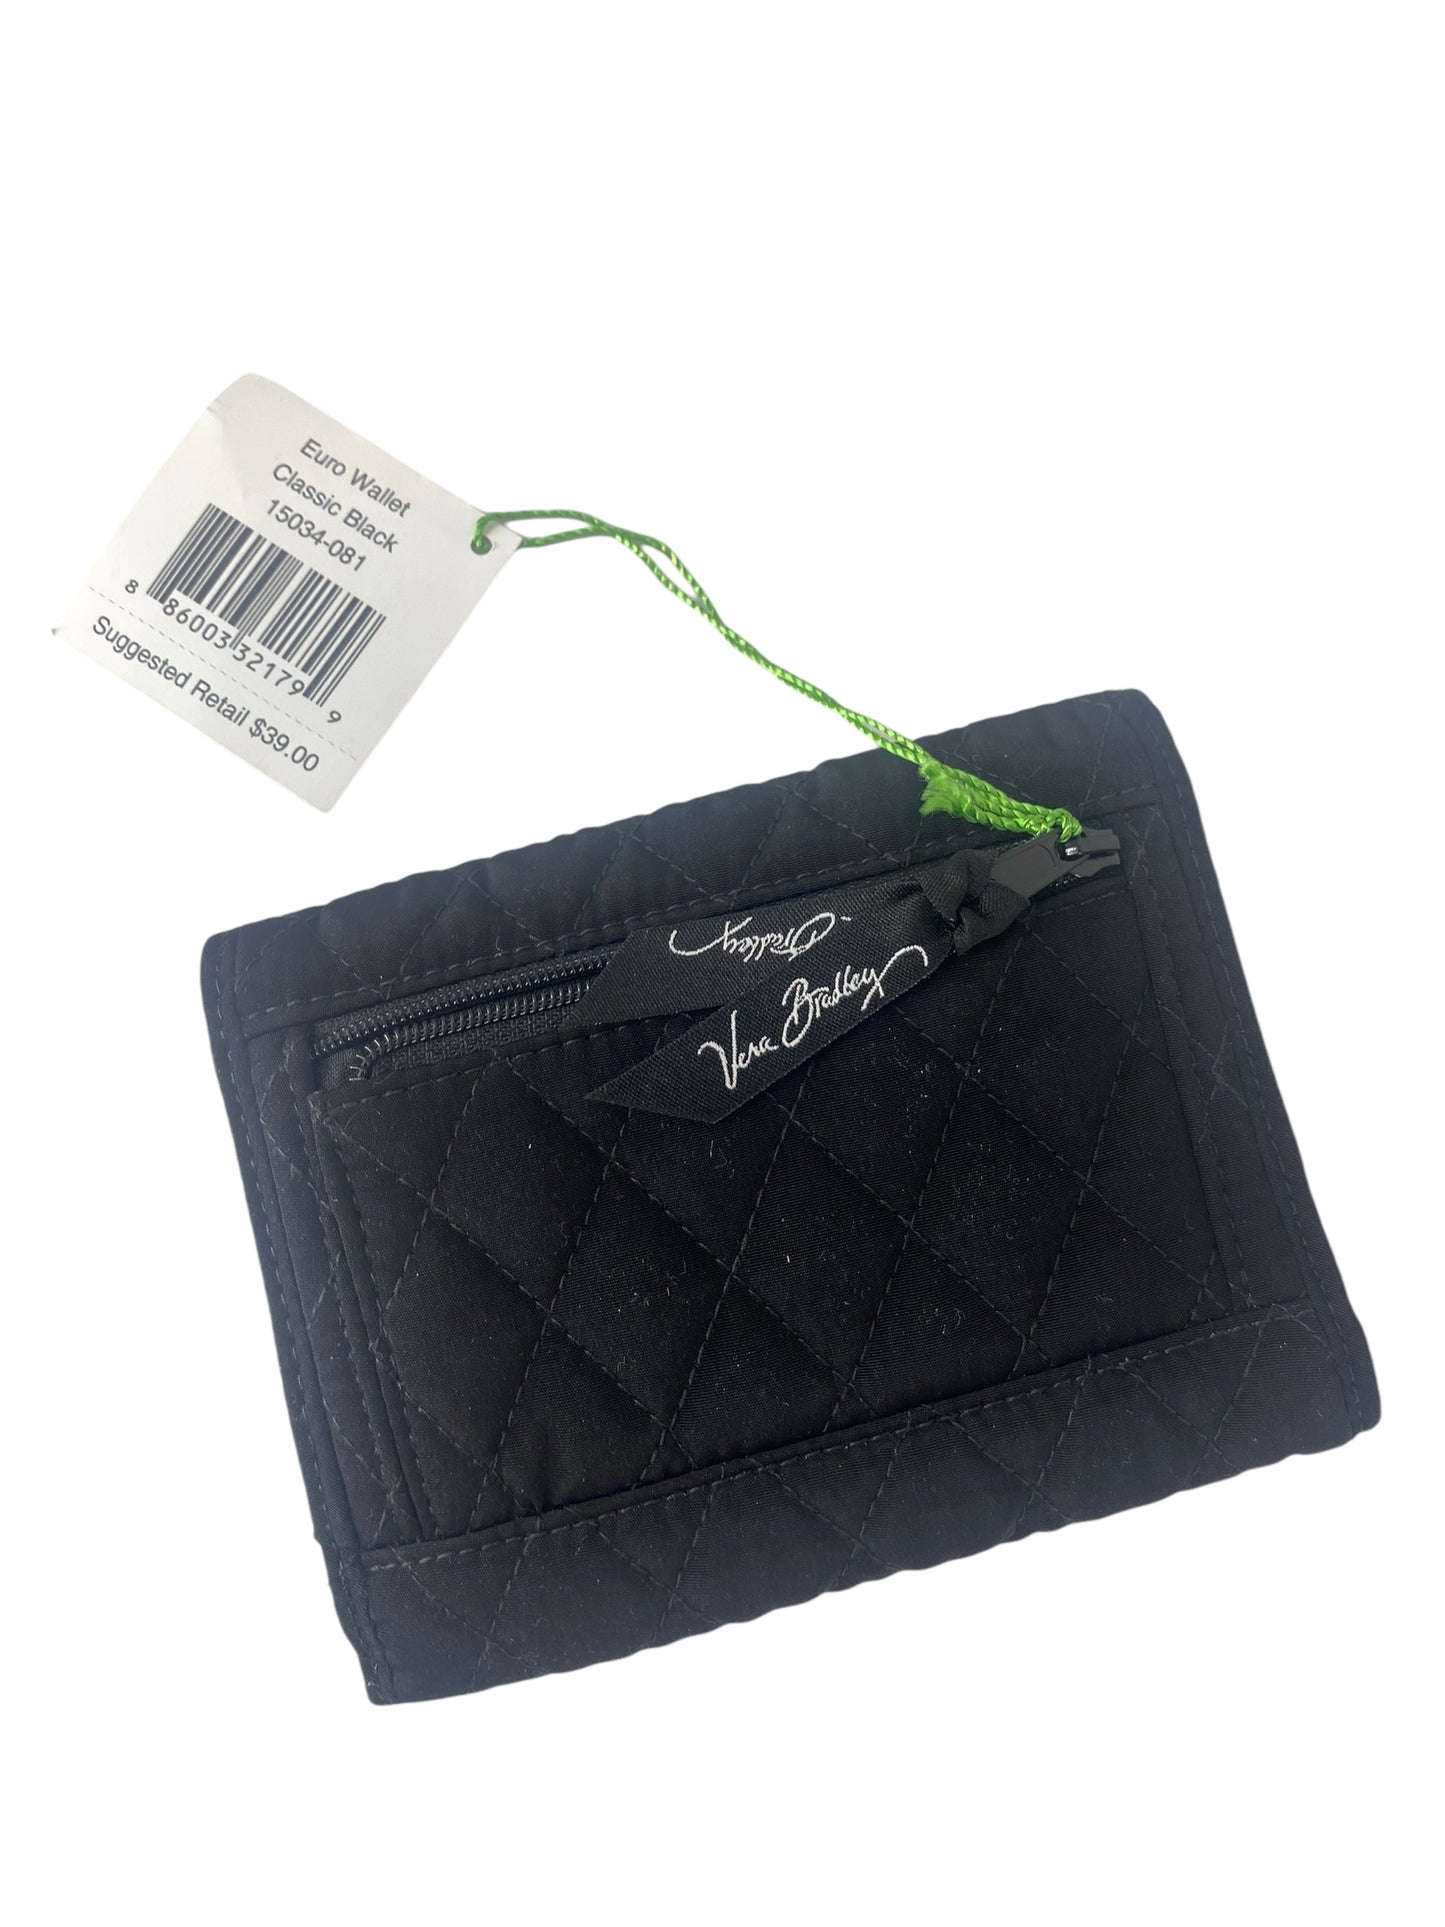 Wallet By Vera Bradley  Size: Small